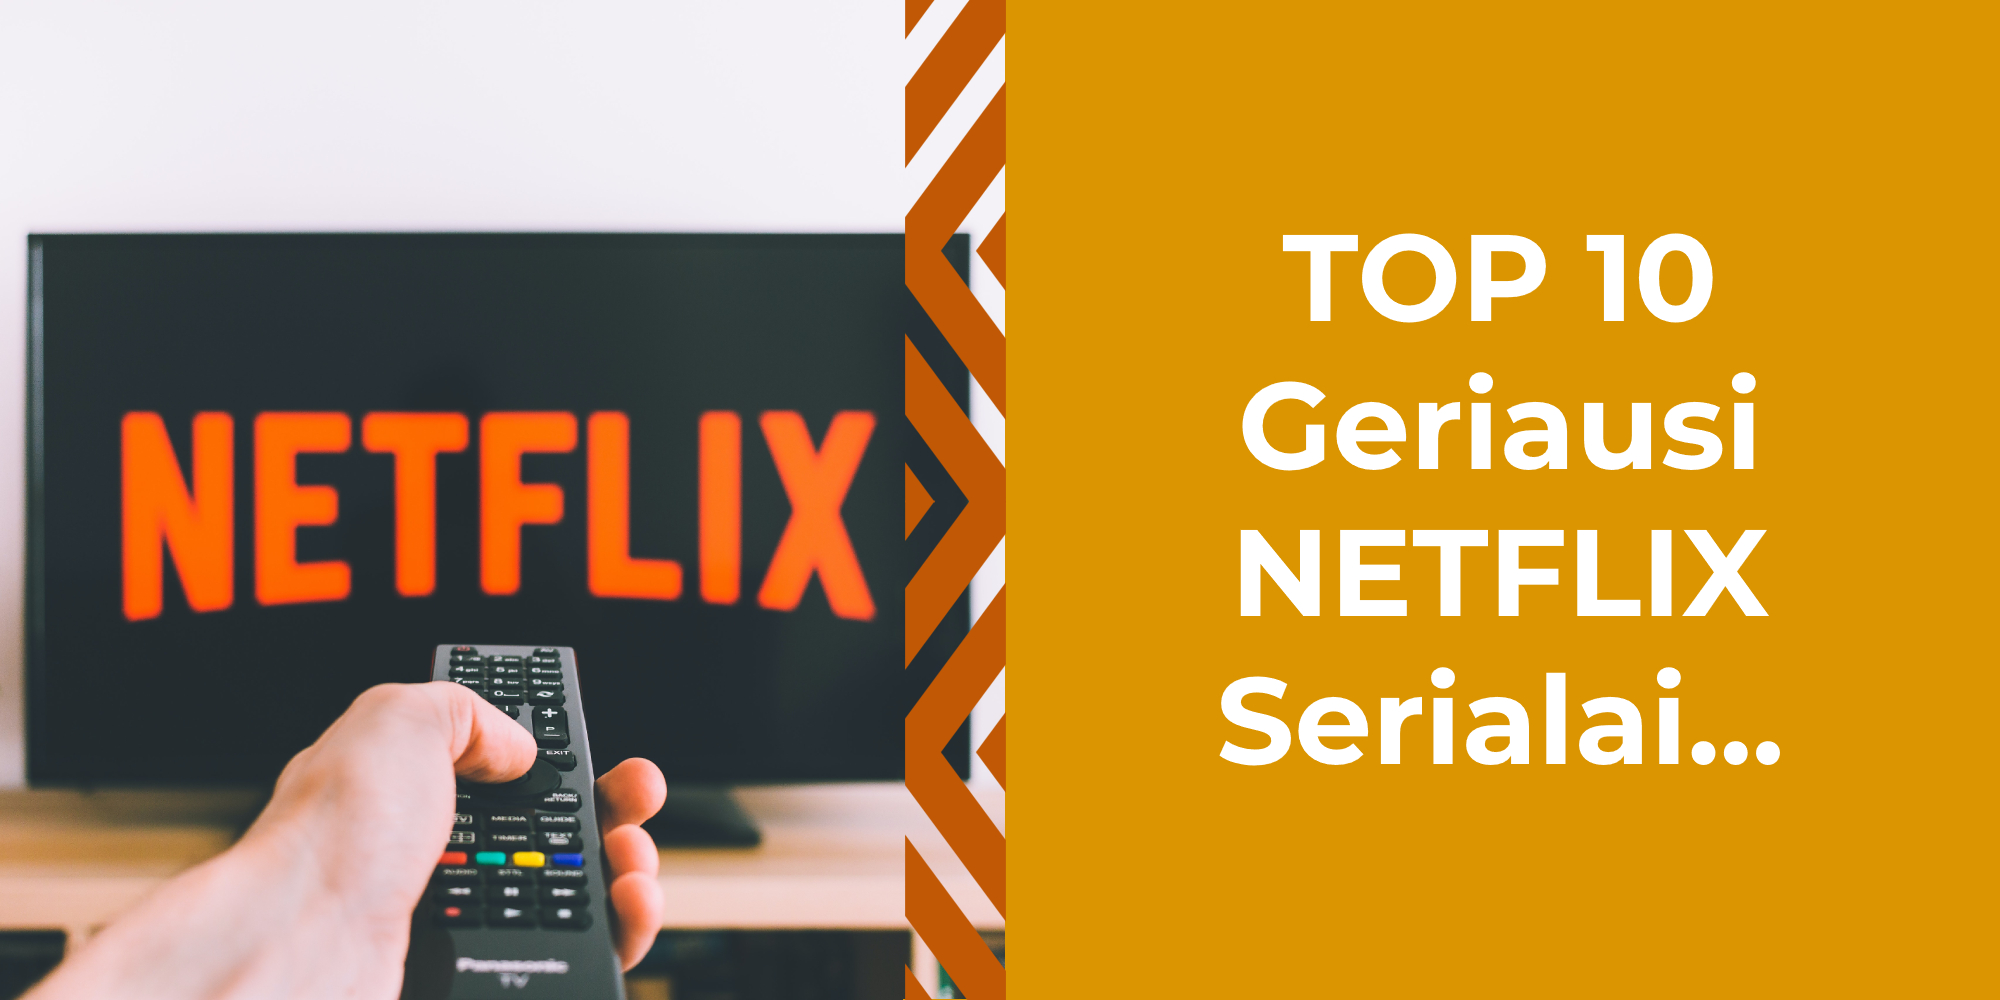 TOP 10 Geriausi NETFLIX Serialai